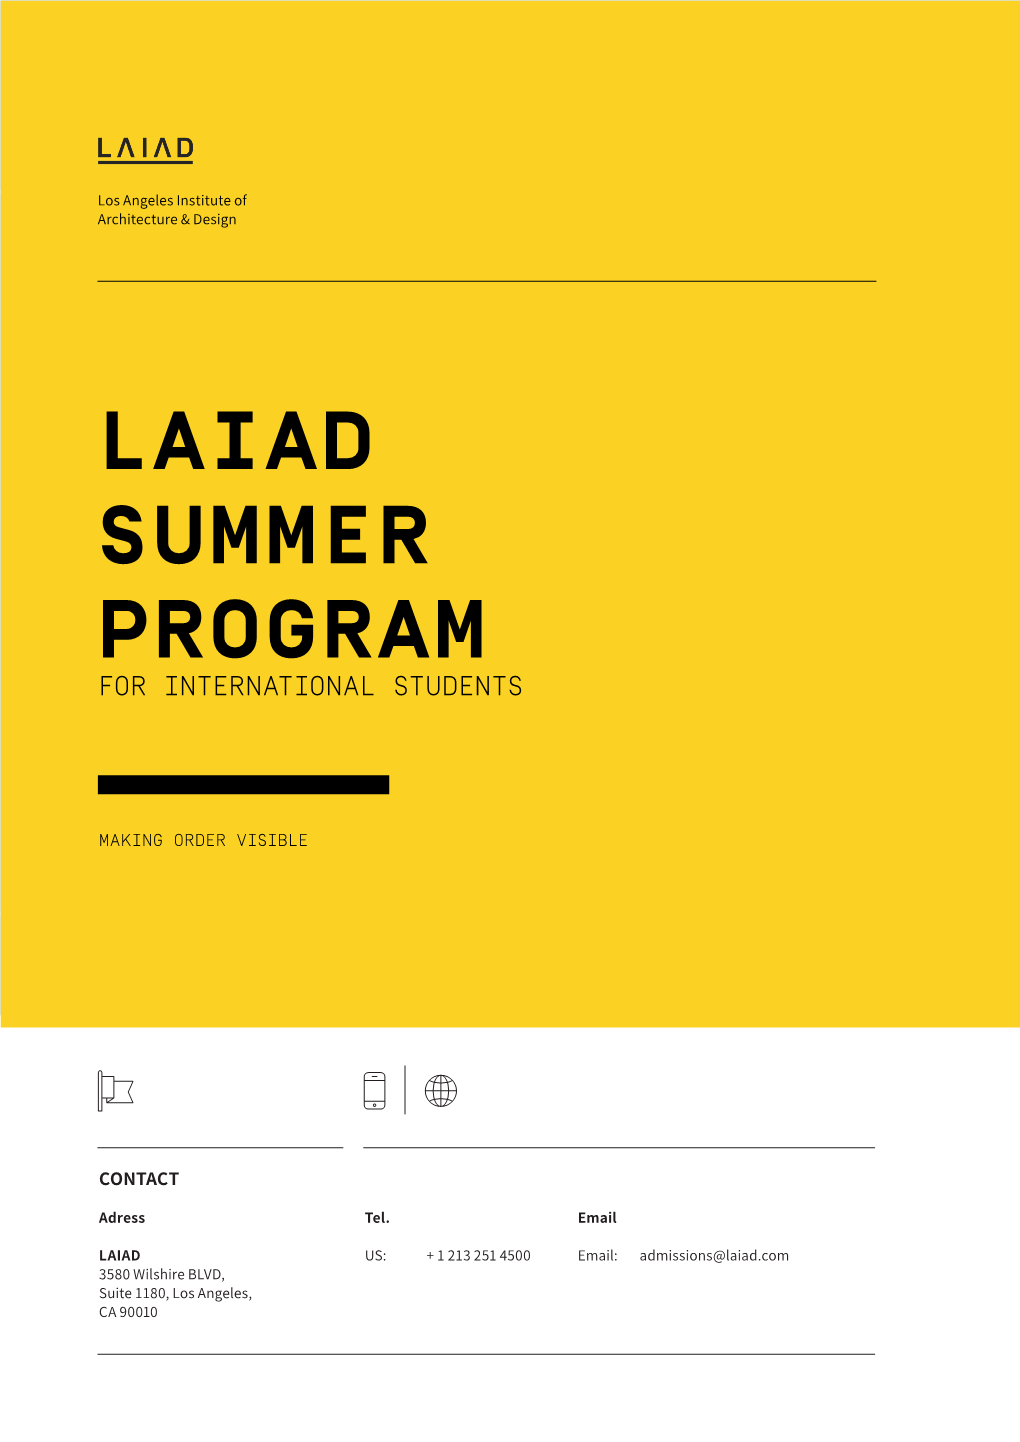 Laiad Summer Program for International Students